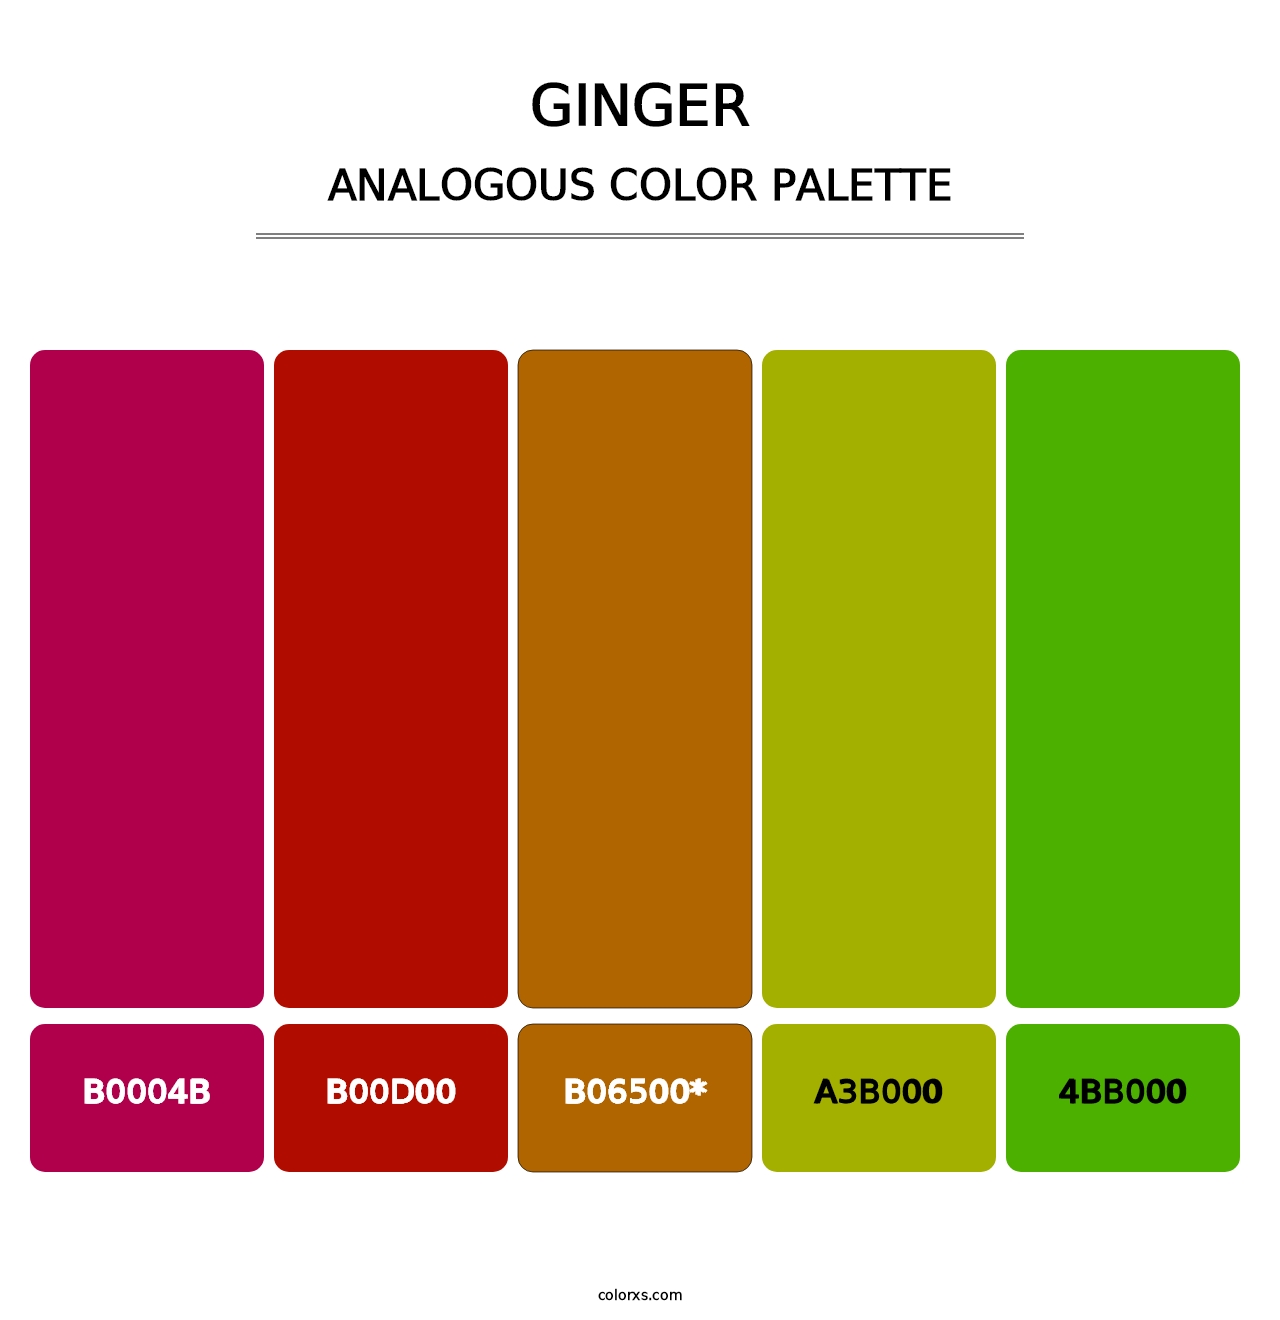 Ginger - Analogous Color Palette